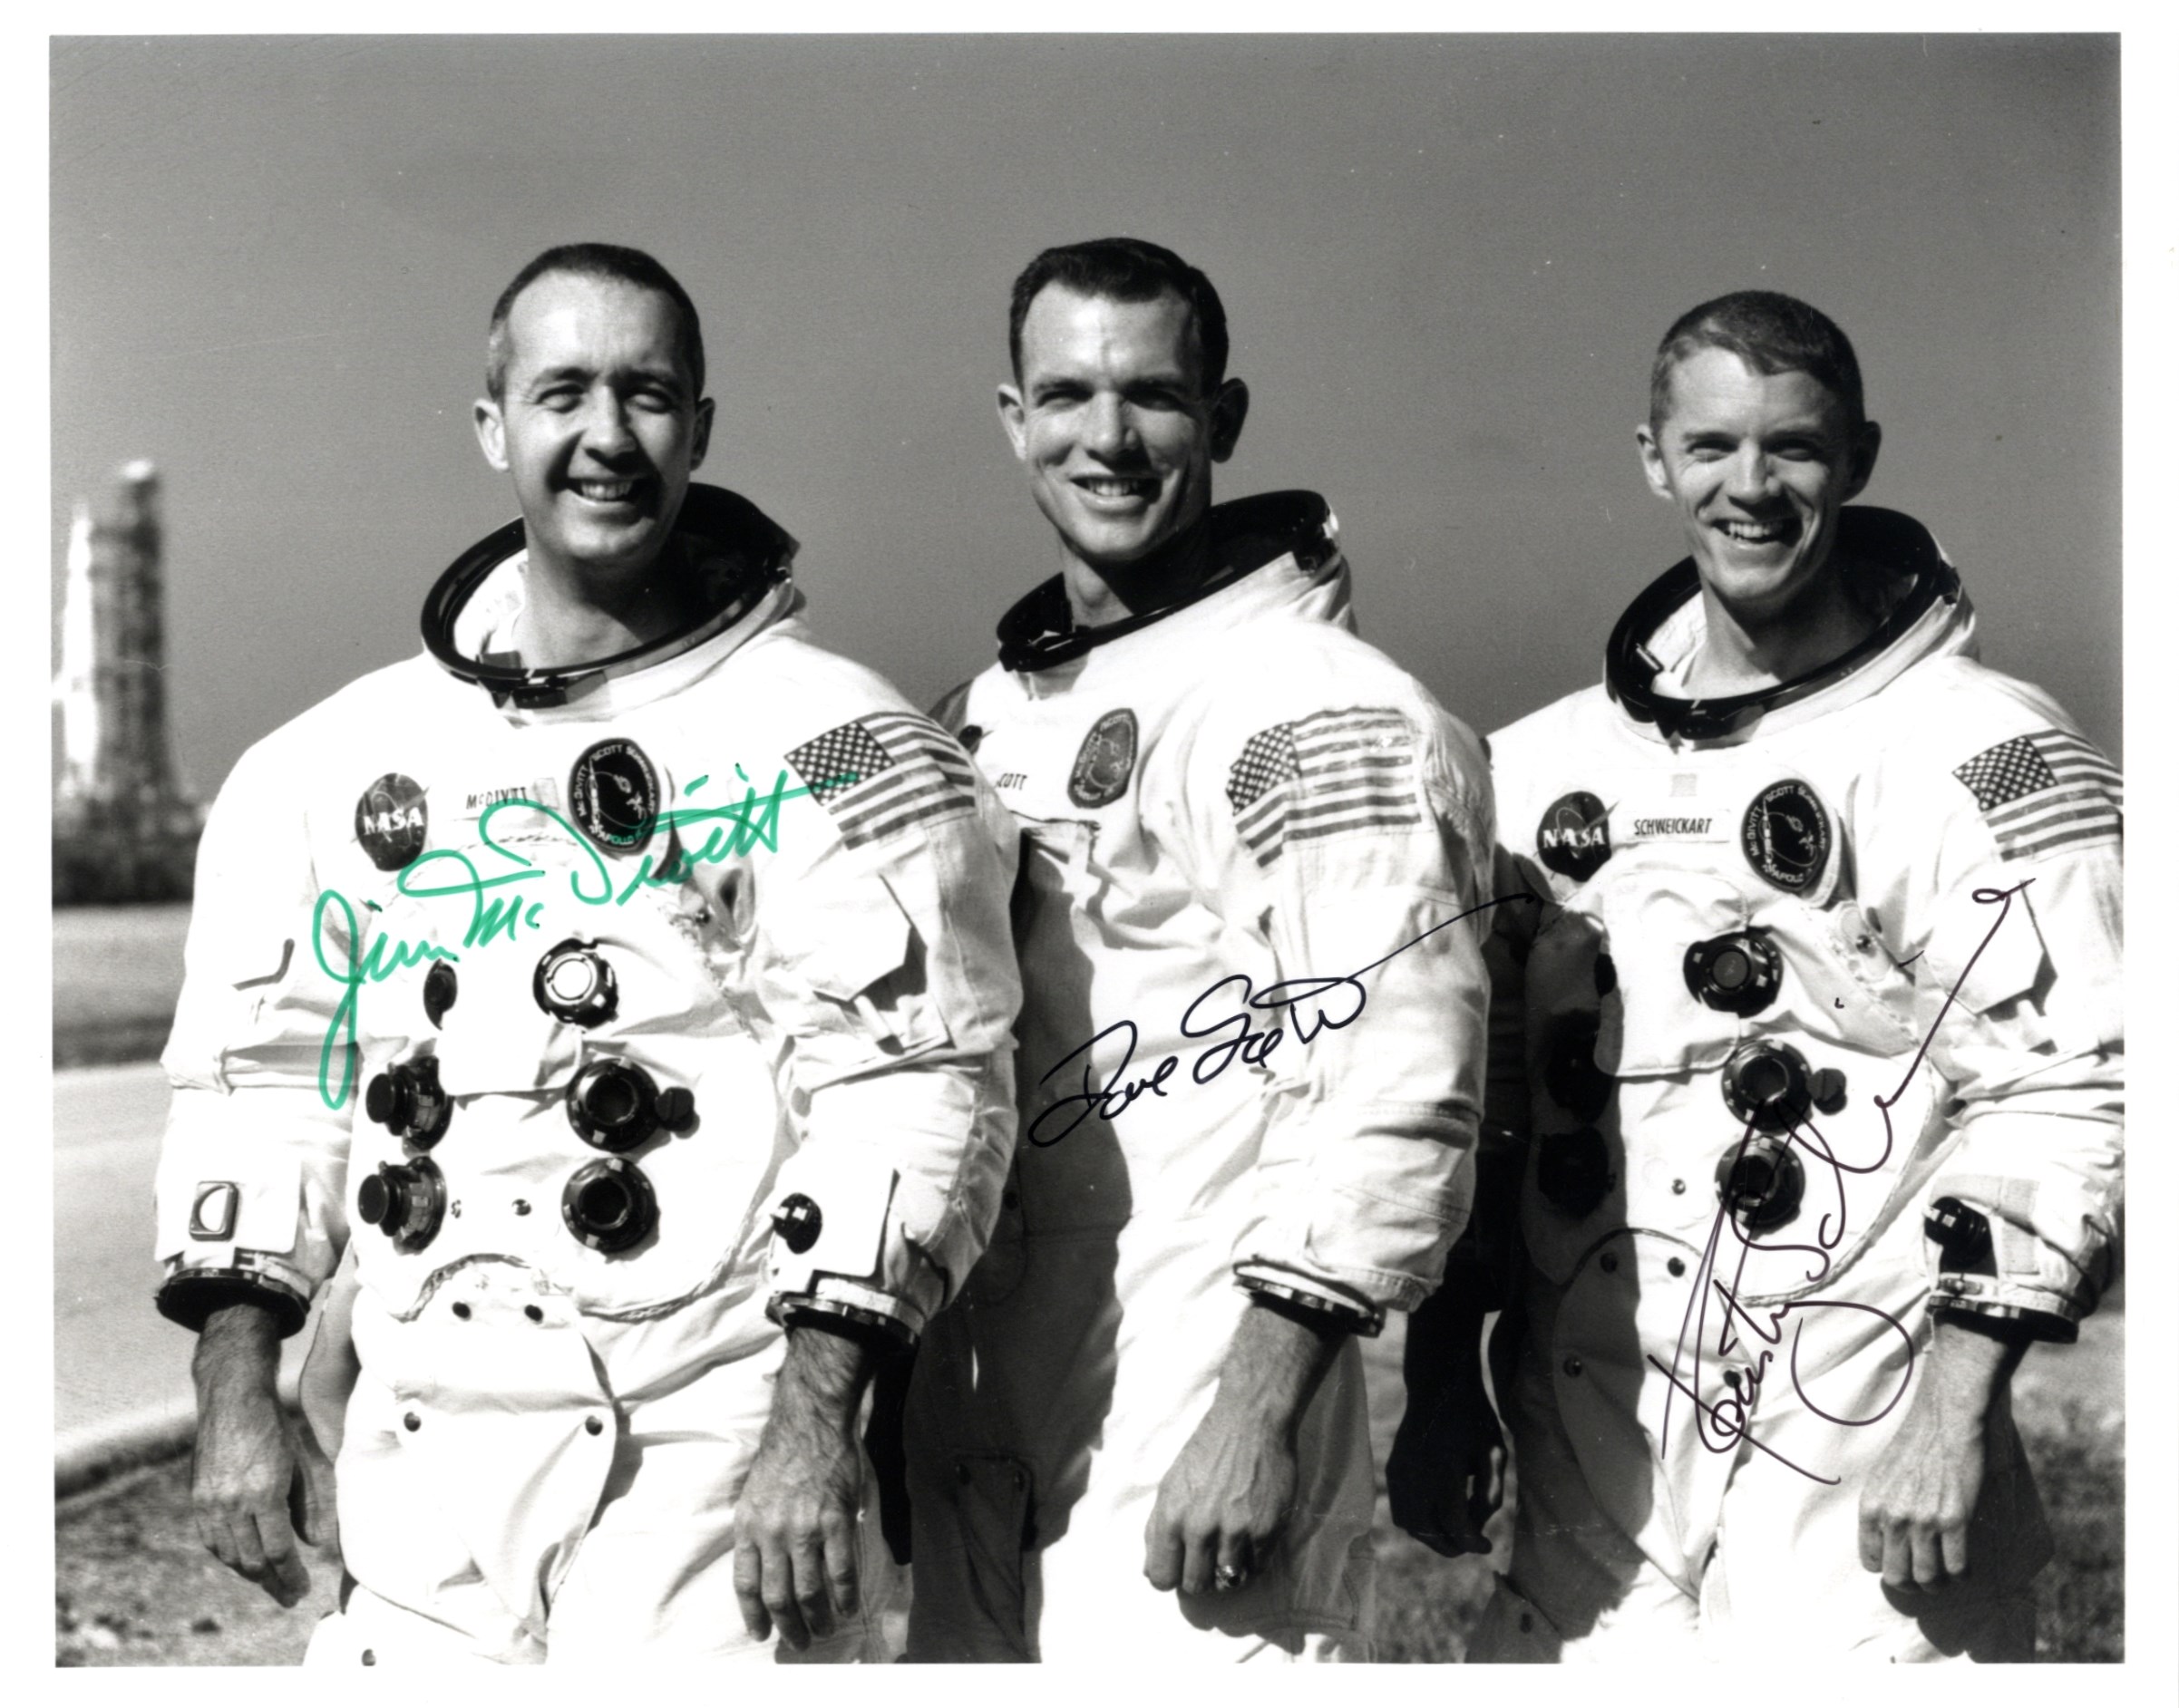 APOLLO IX: Signed 10 x 8 photograph by all three members of the Apollo IX crew individually